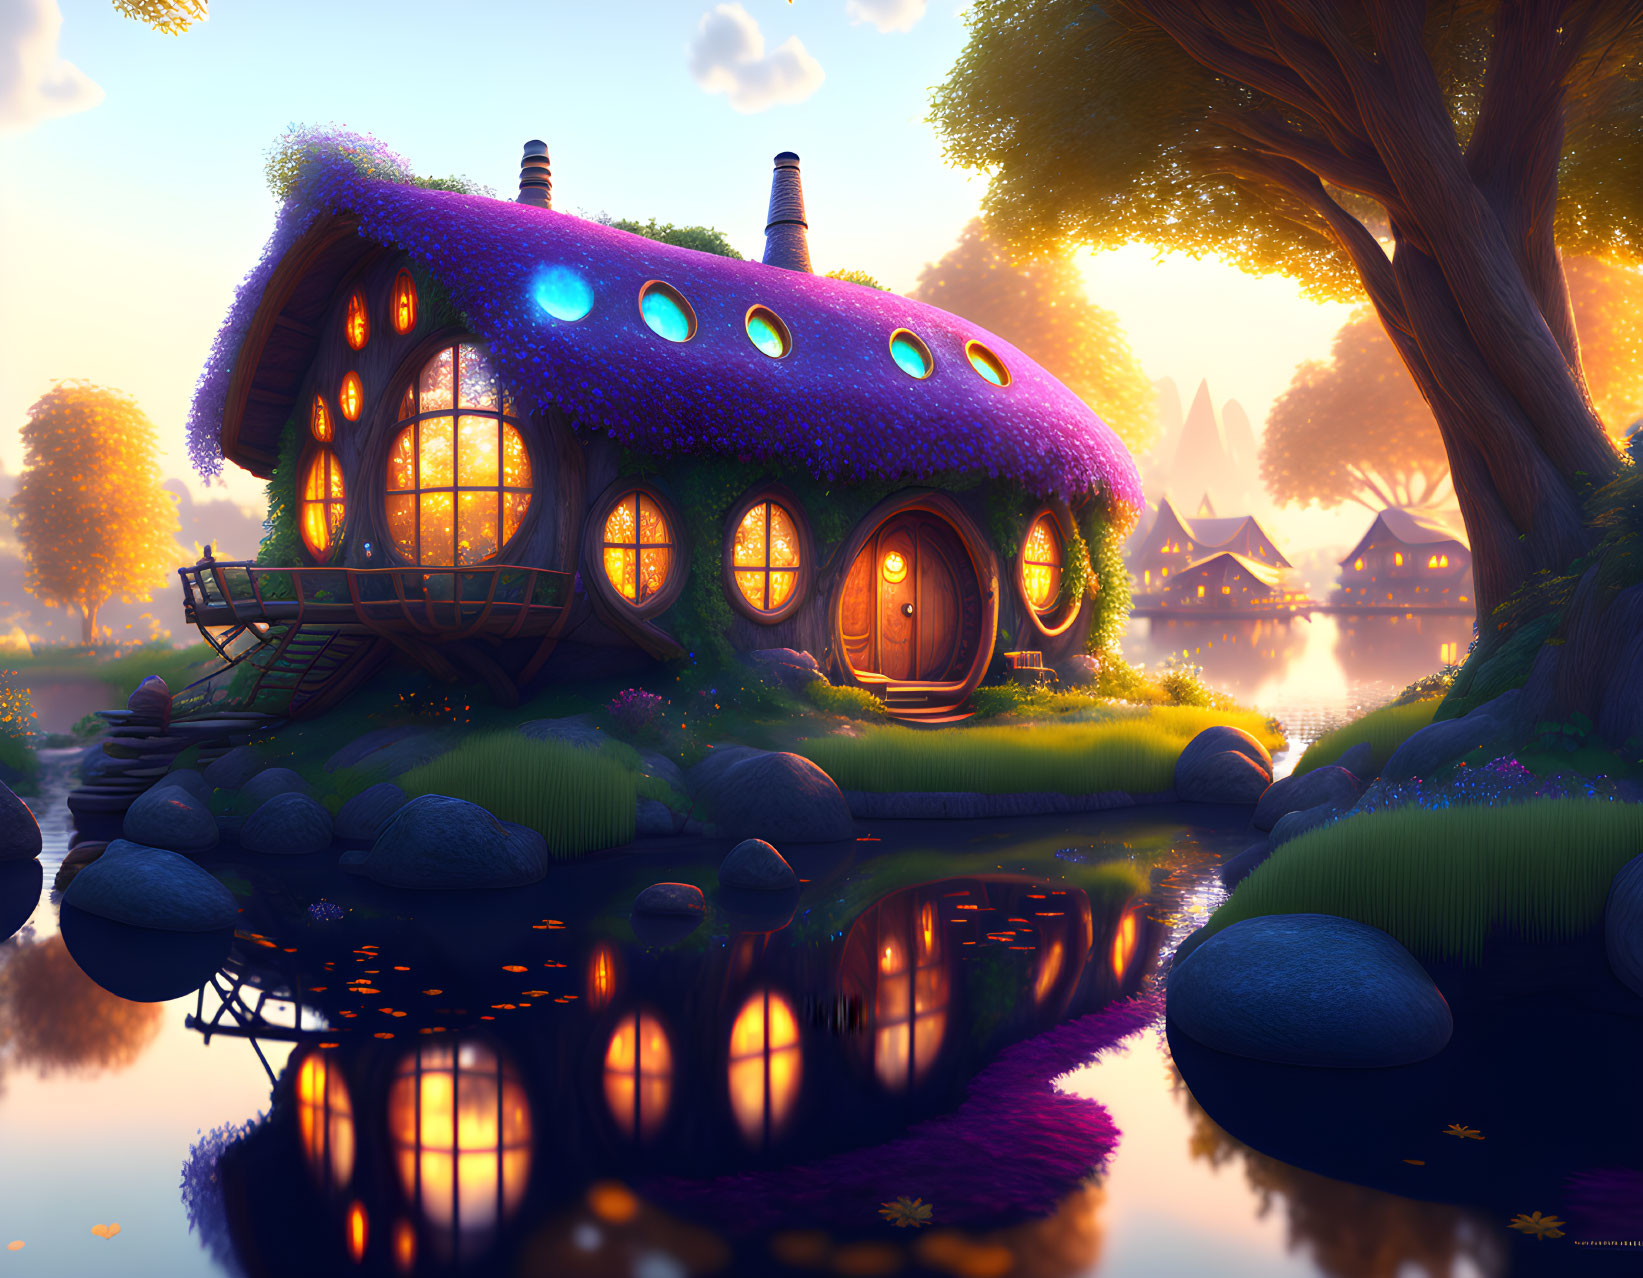 Enchanting mushroom house at sunset by serene lake